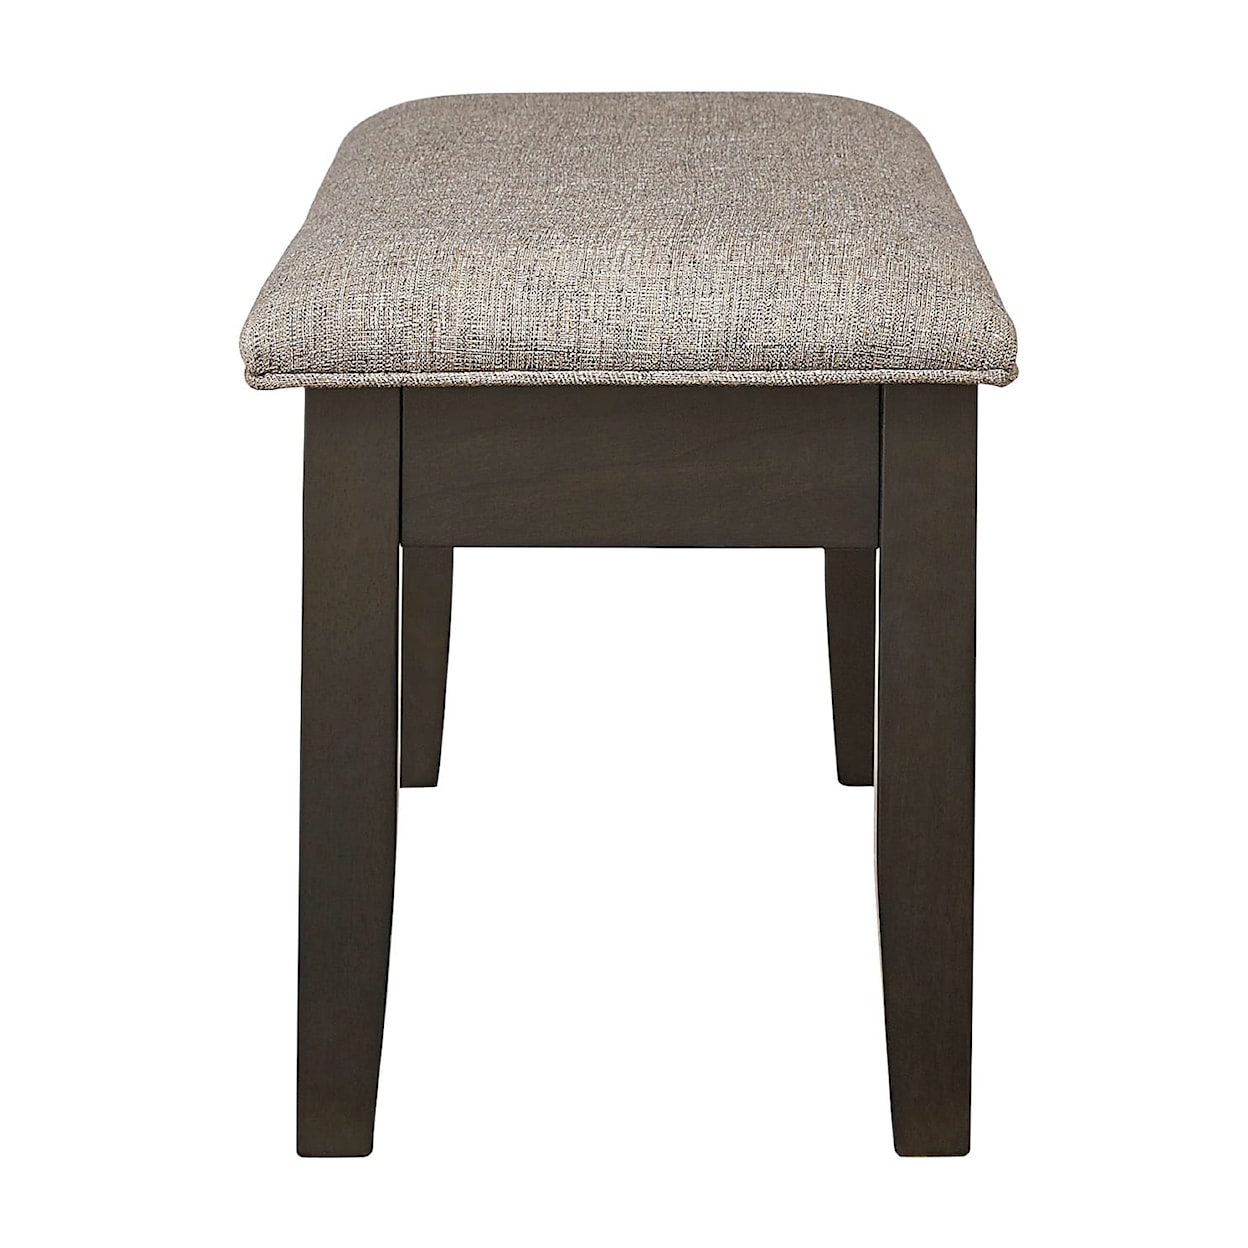 Ashley Furniture Signature Design Ambenrock Upholstered Dining Bench with Storage